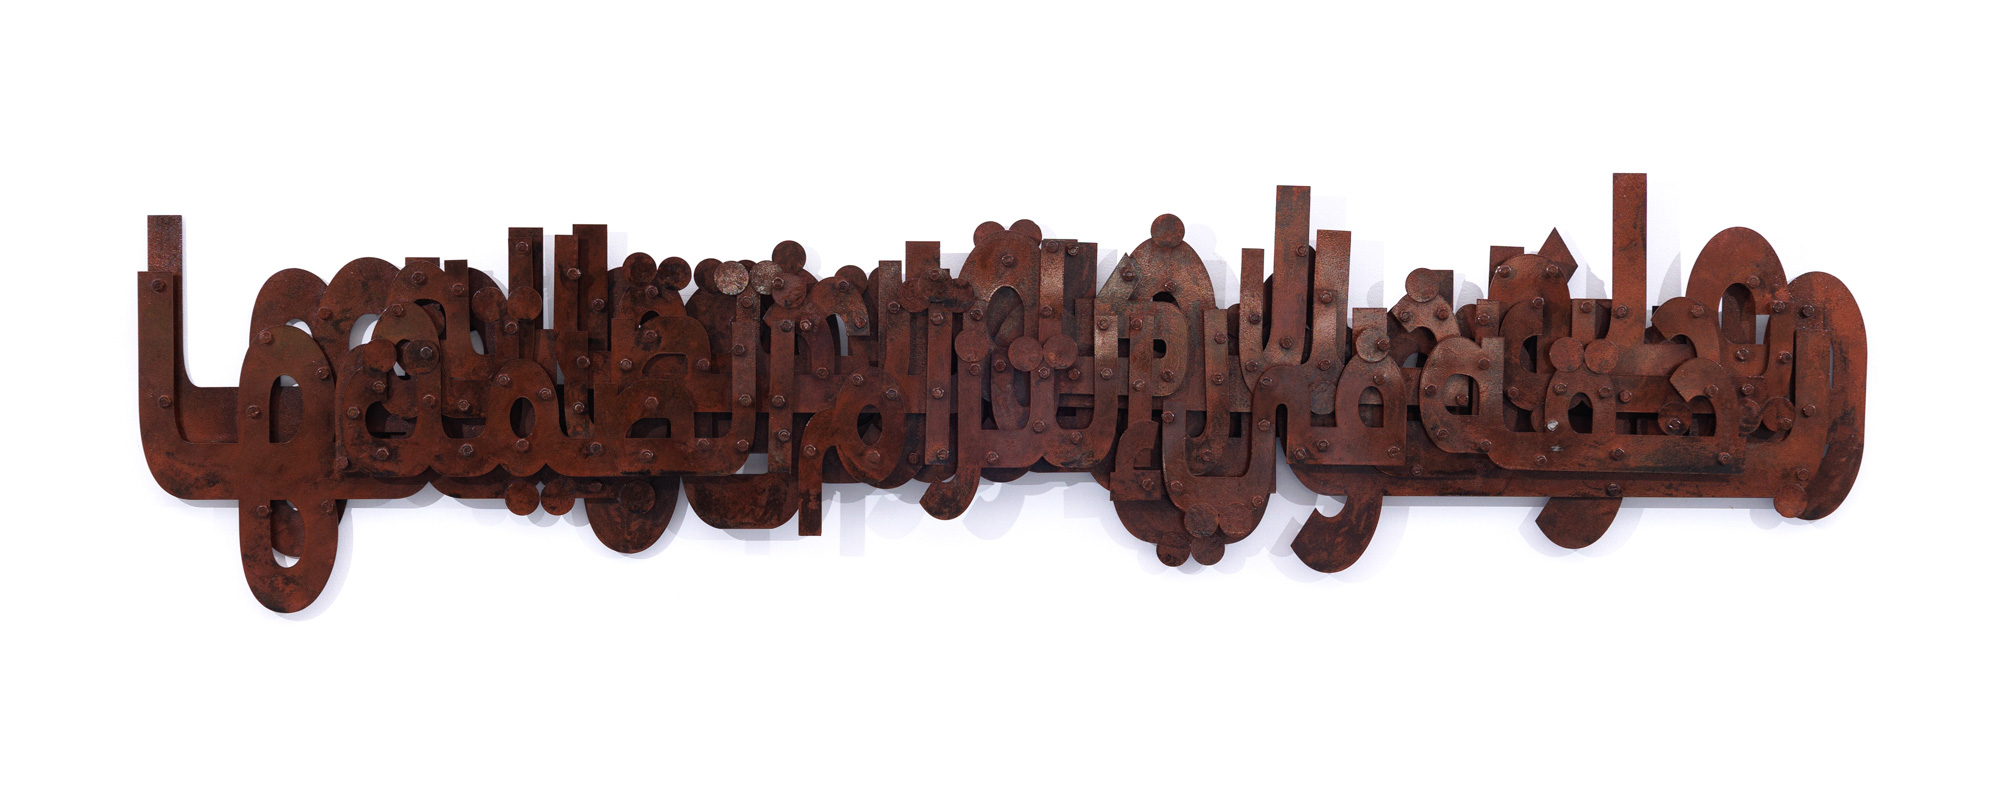 Al Haq fi ltizam As'samt - الحق في إلتزام الصمت (Le droit de garder le silence), 2022. Bas-relief en métal, 69 x 300 x 6 cm